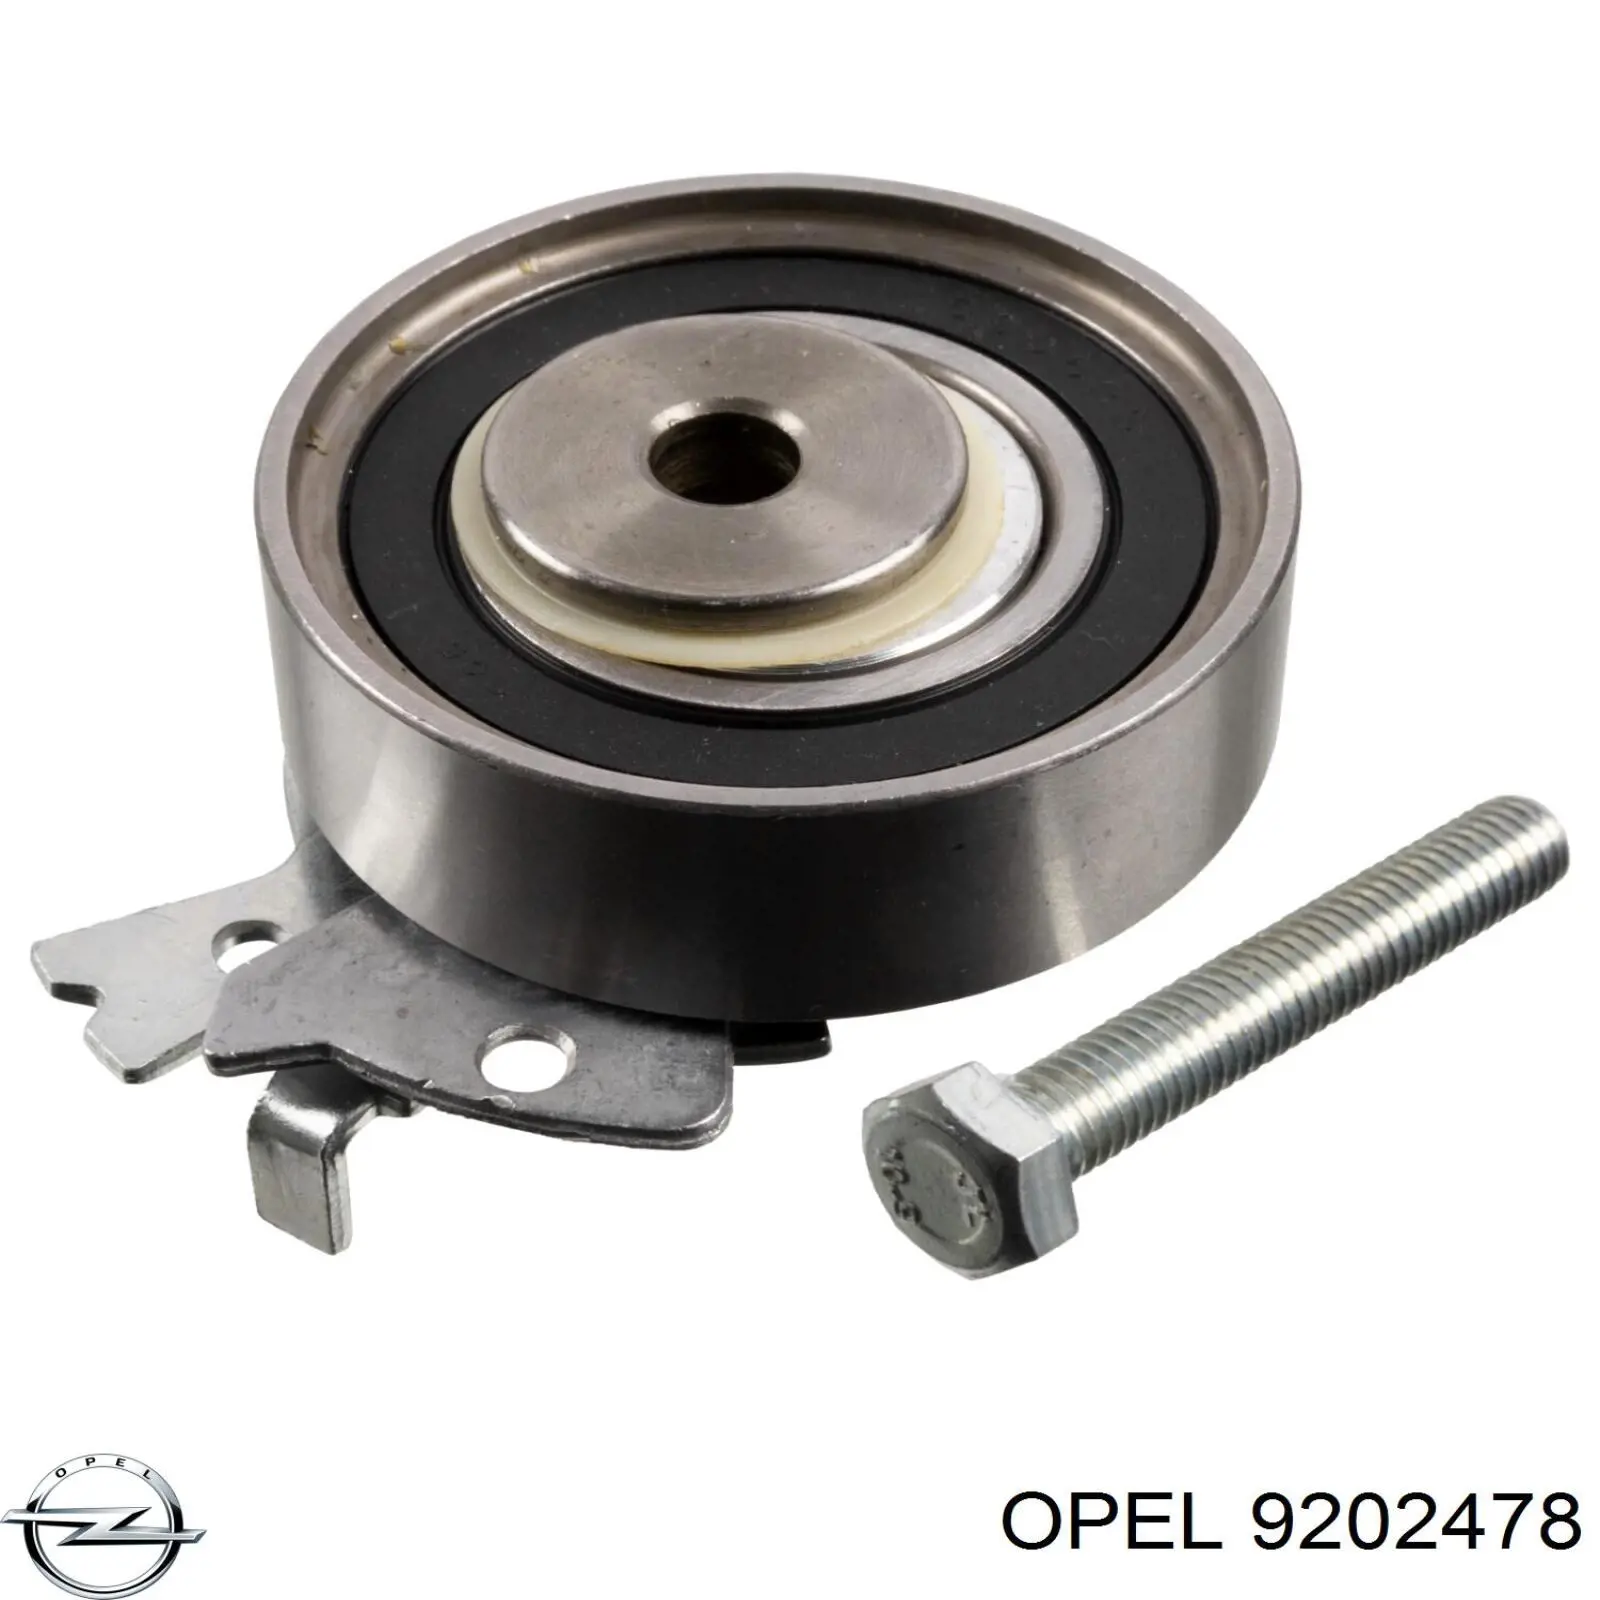 9202478 Opel tensor correa distribución